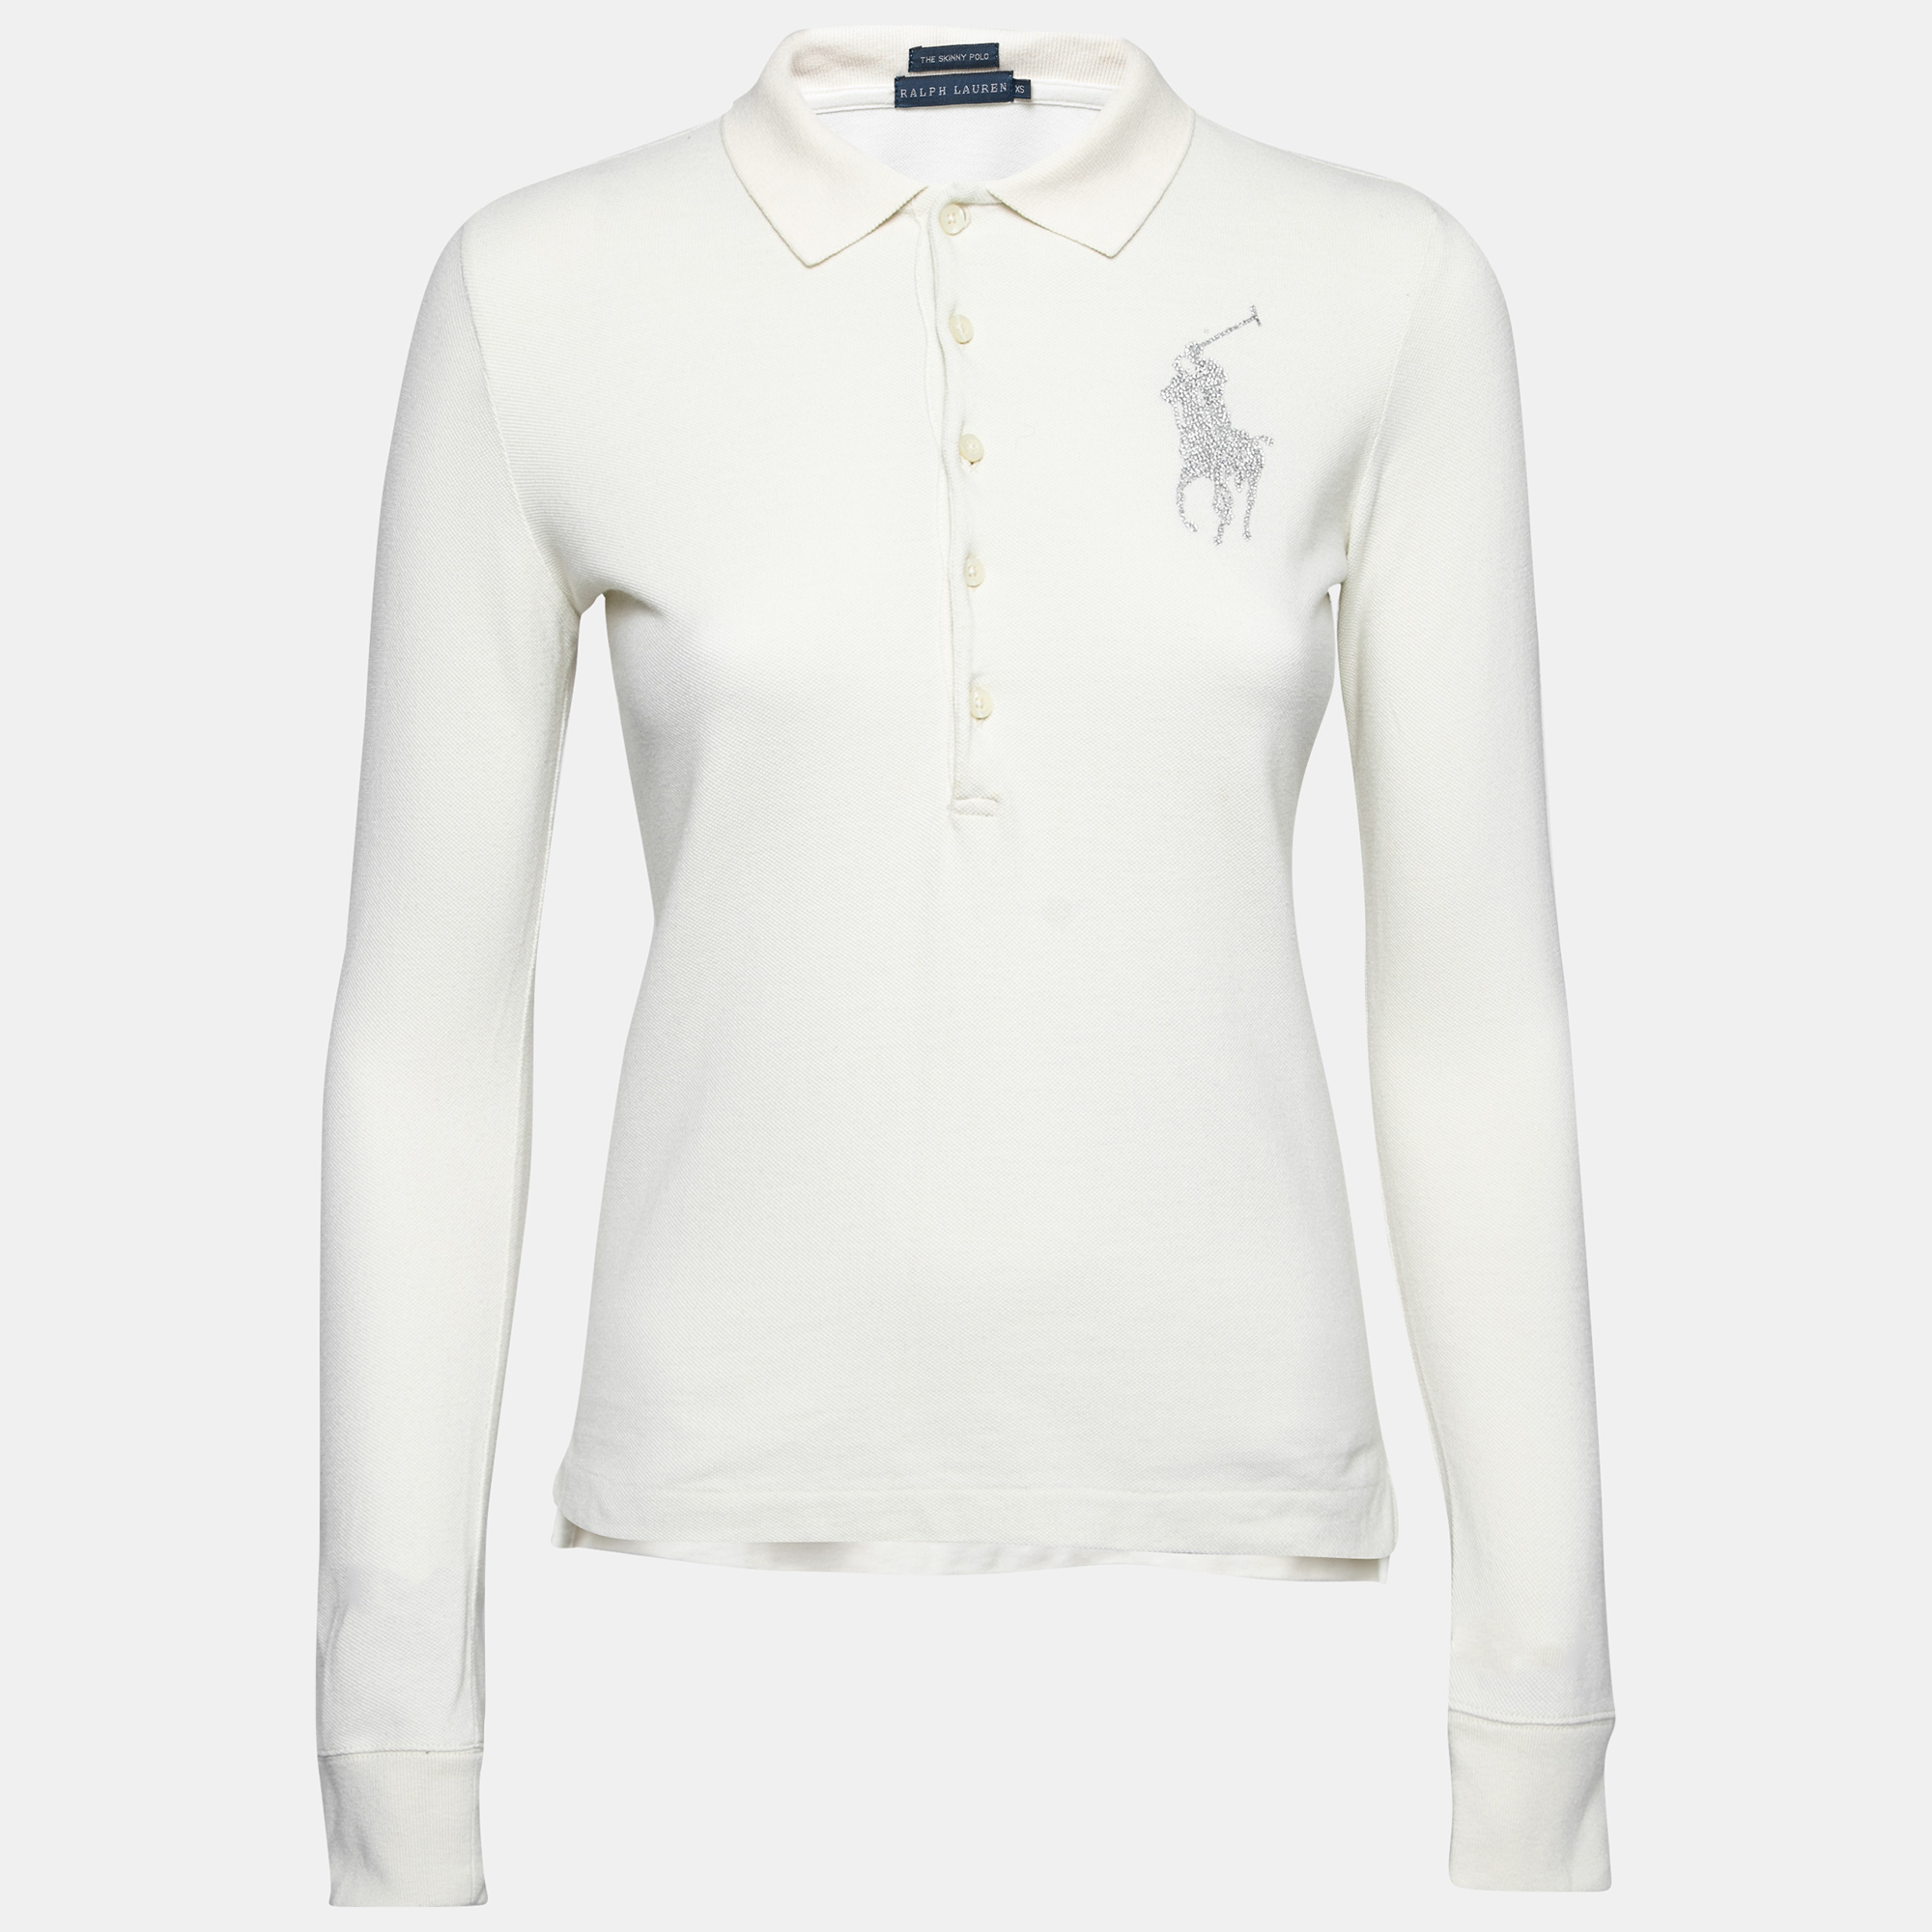 Ralph lauren cream cotton pique logo embellished skinny polo t-shirt xs